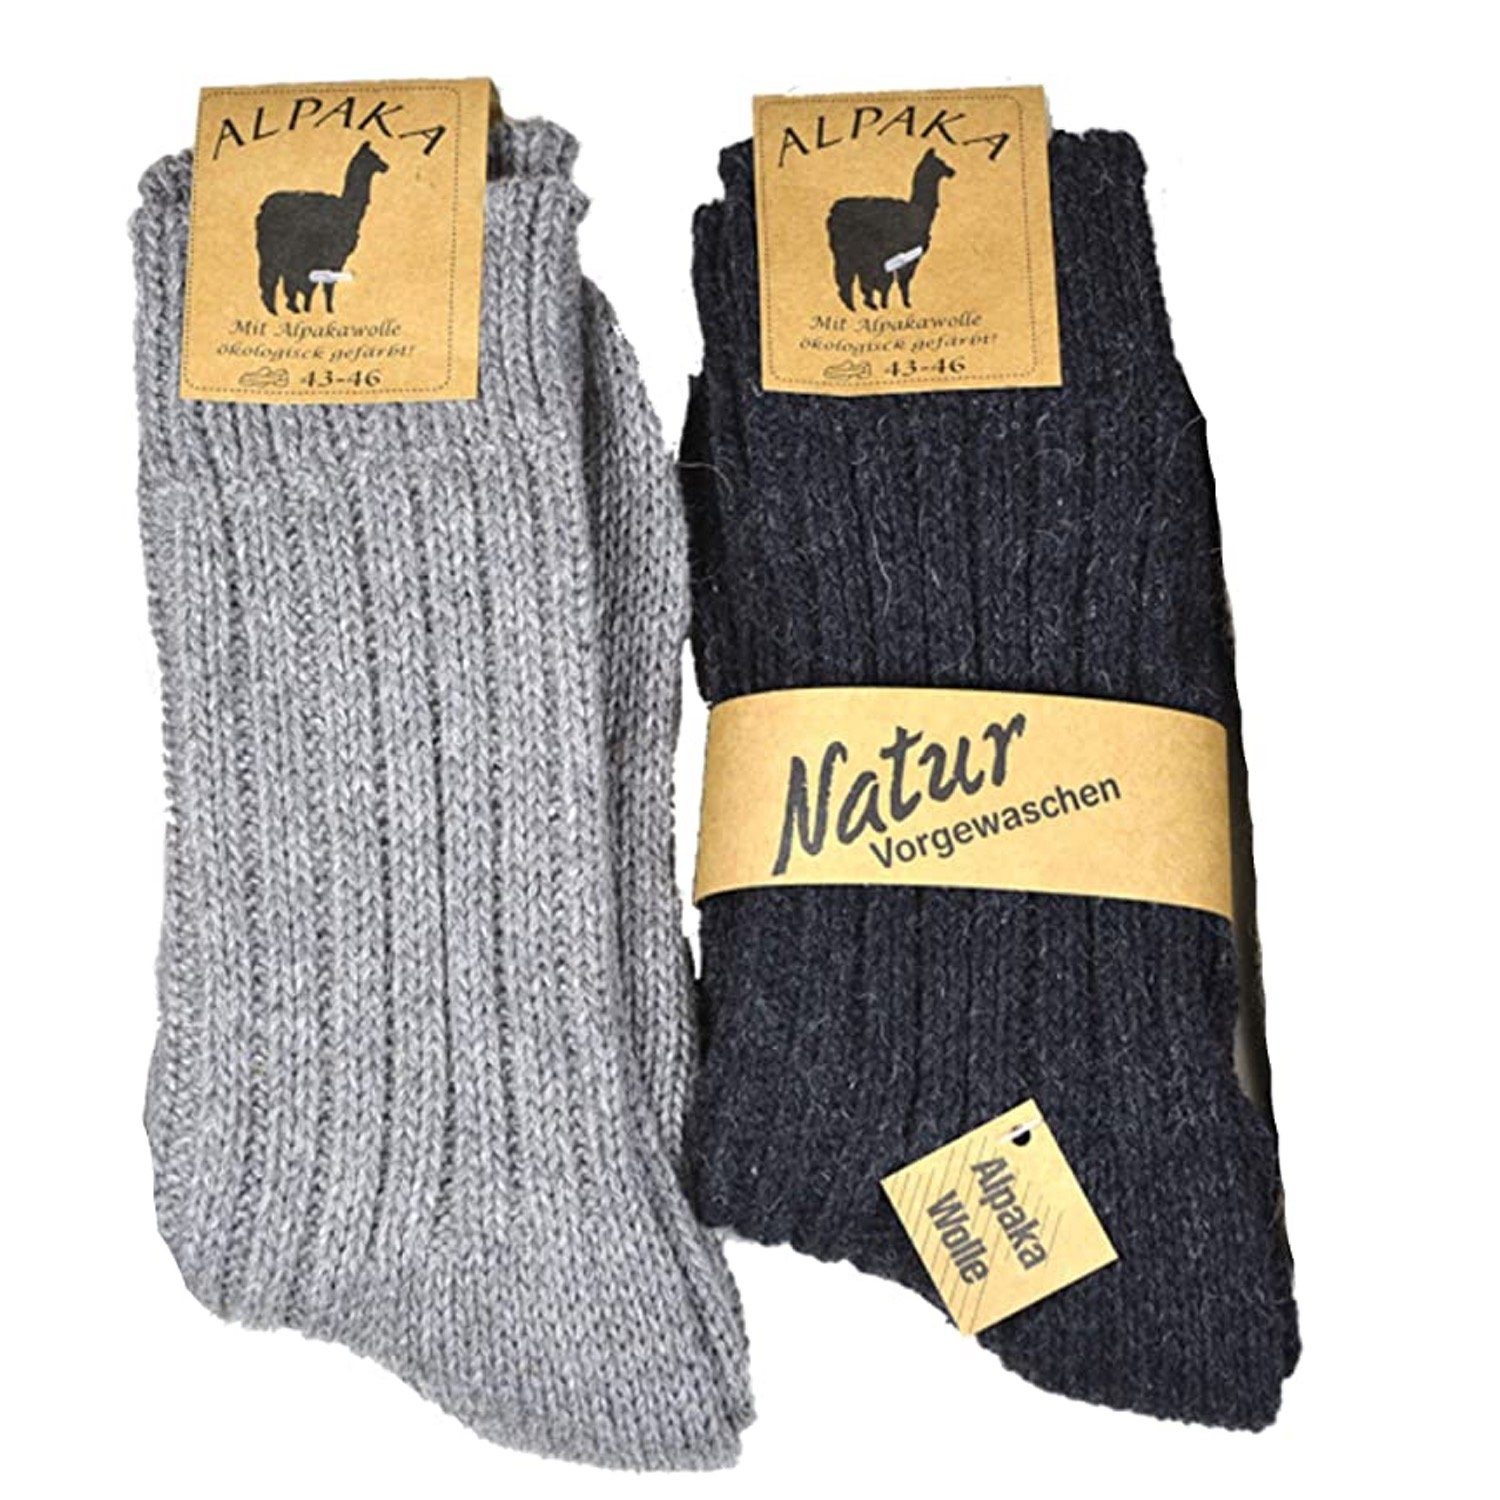 grau-schwarz underwear (2-Paar) Socken Cocain Socken Alpaka selbst wie gestrickt Stricksocken Wollsocken